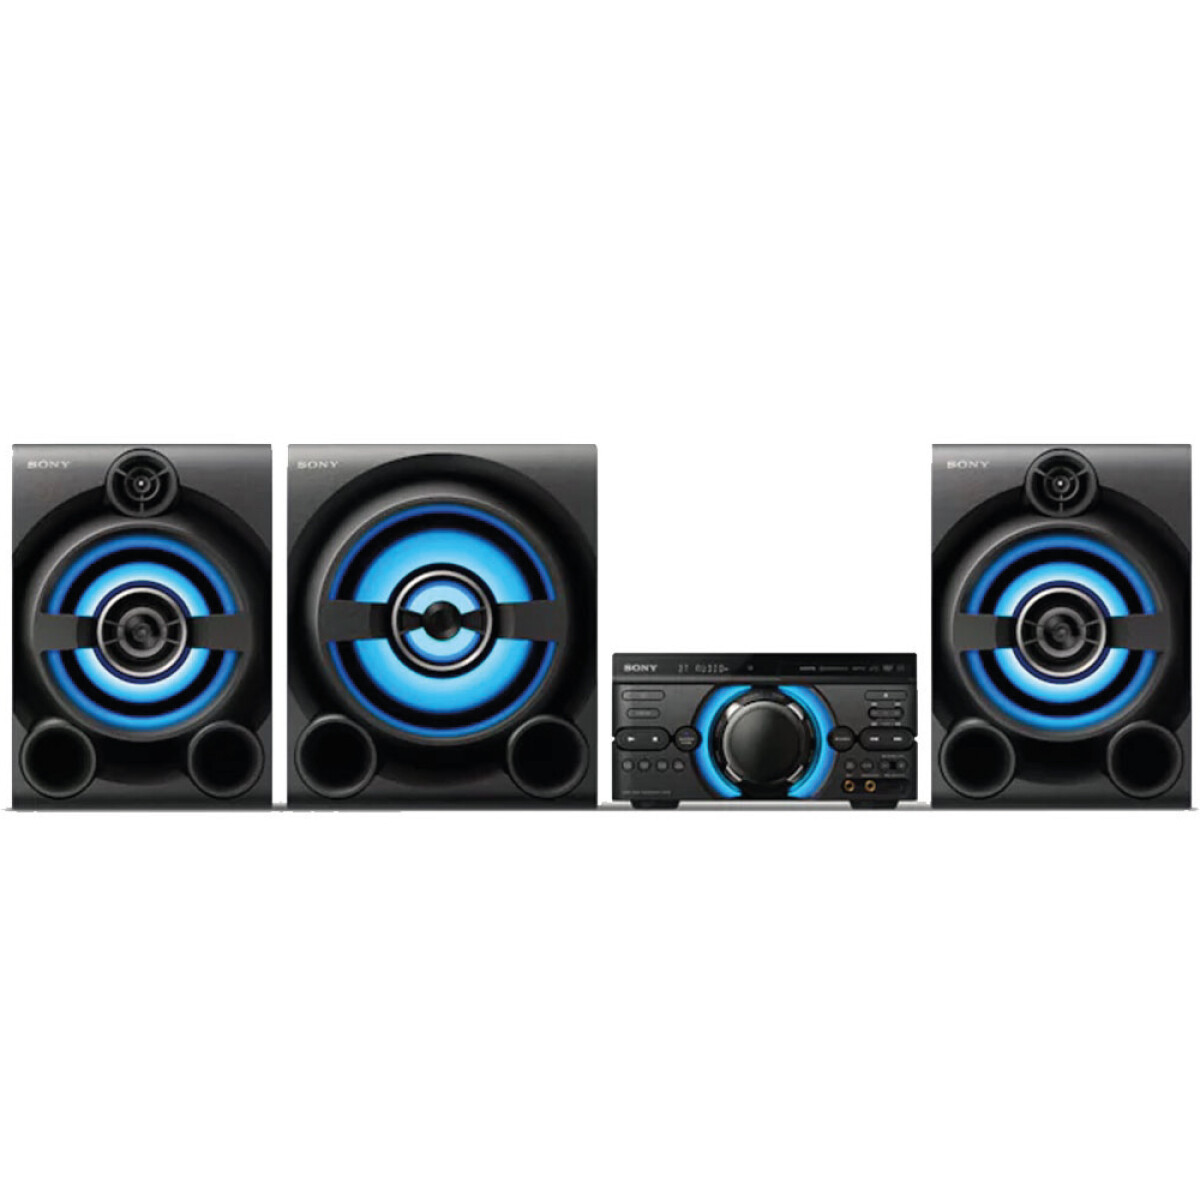 Sistema de audio de alta potencia con DVD M80D 